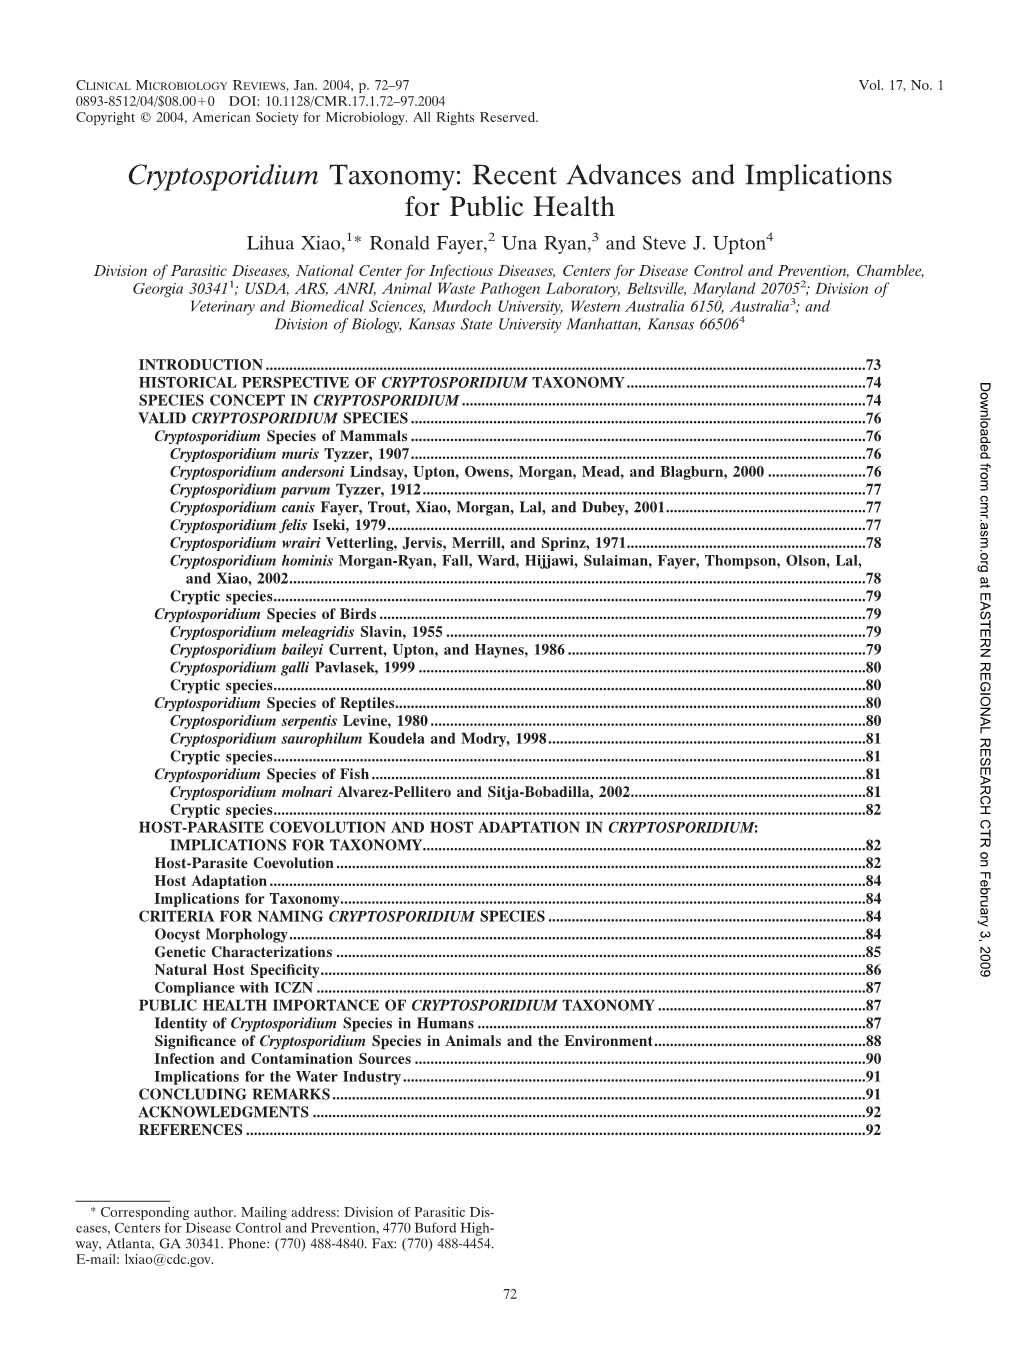 Cryptosporidium Taxonomy: Recent Advances and Implications for Public Health Lihua Xiao,1* Ronald Fayer,2 Una Ryan,3 and Steve J